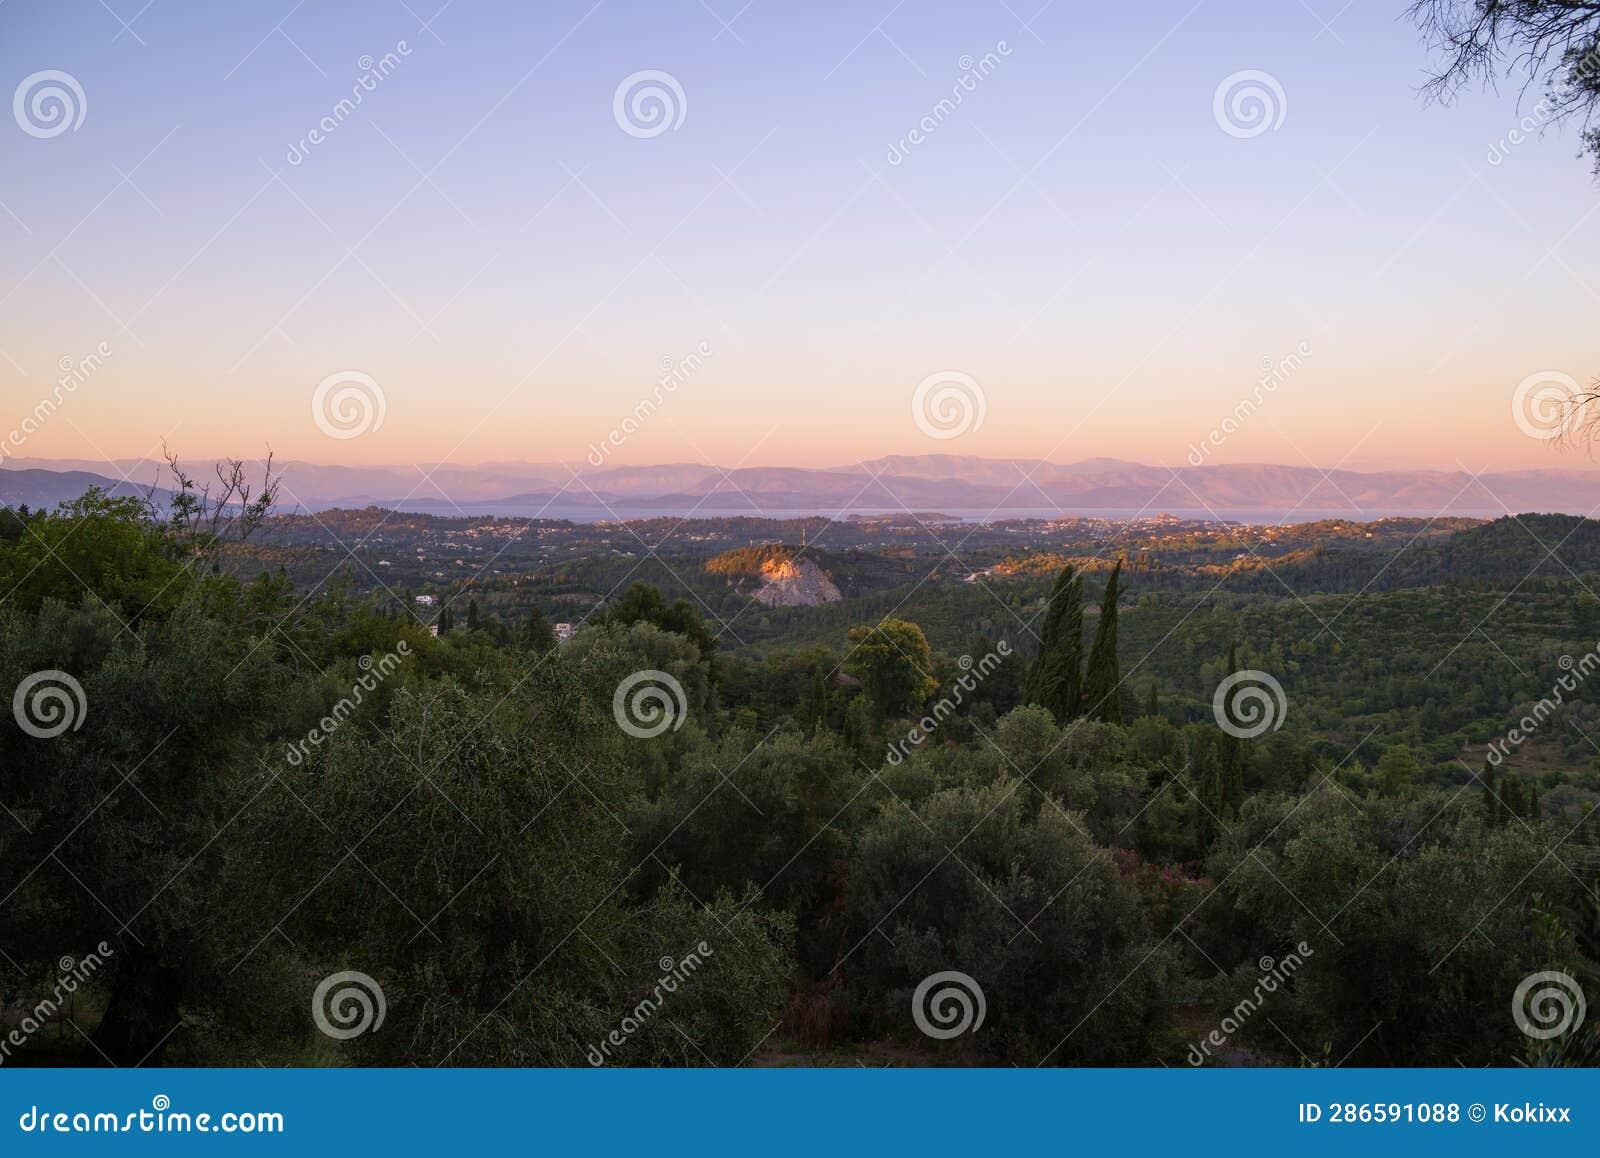 Amazing Mountainous View To Corfu from Pelekas Village in the Dusk ...